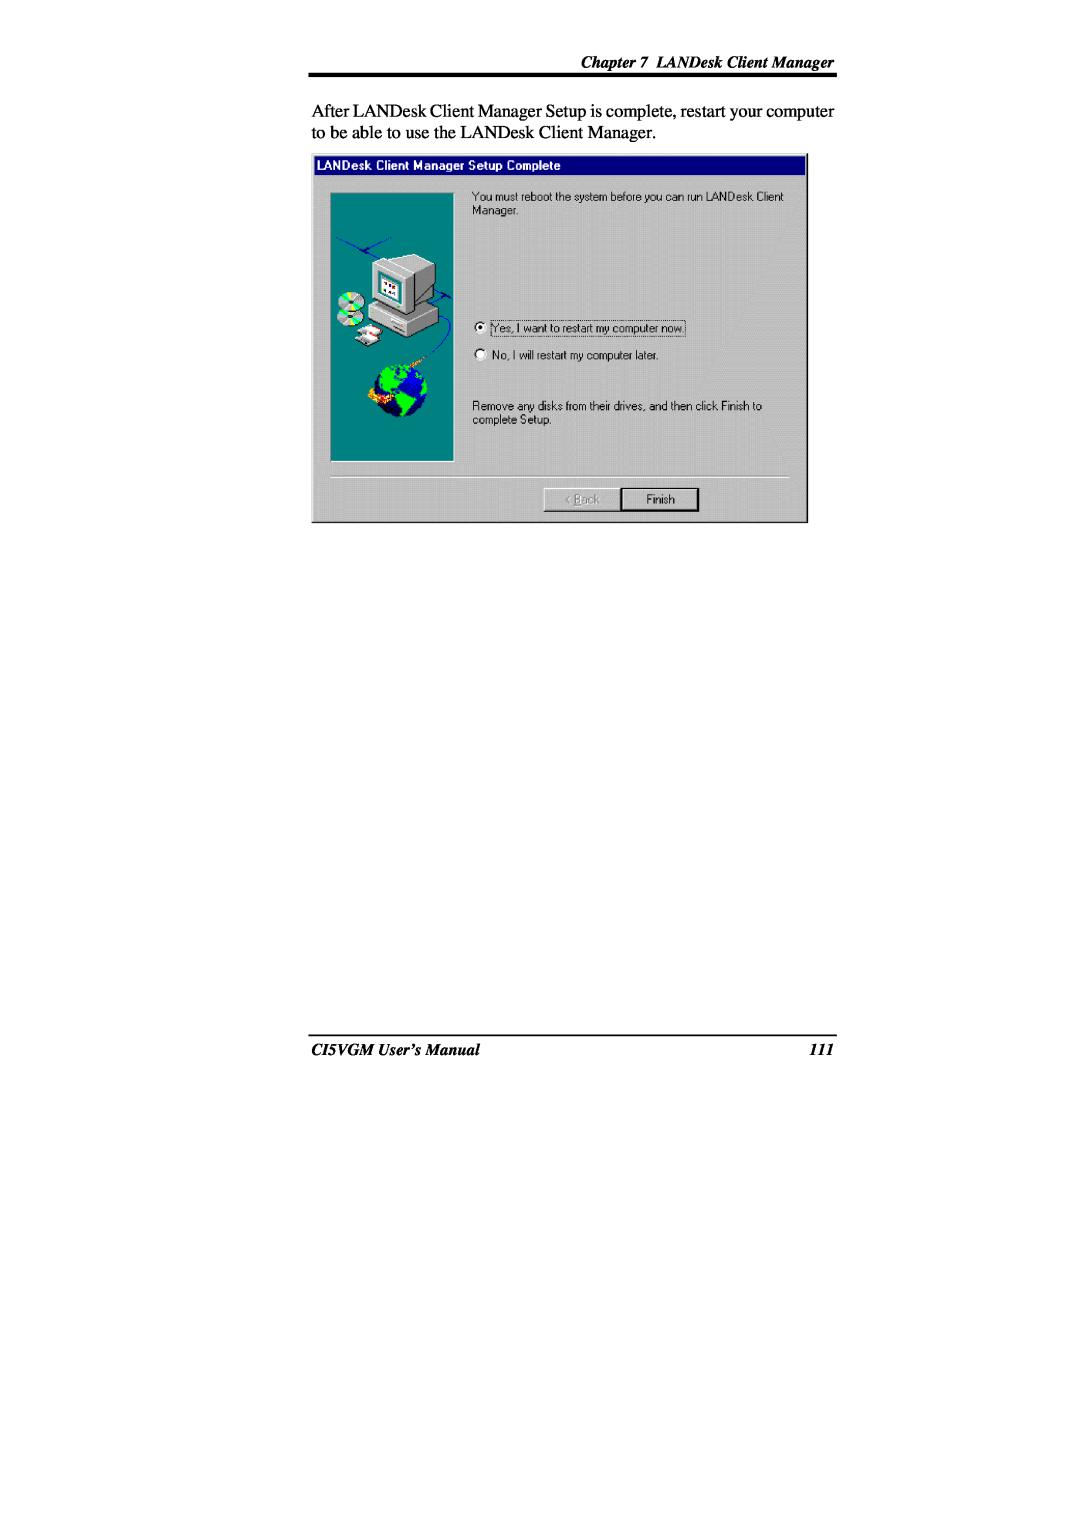 IBM CI5VGM Series user manual LANDesk Client Manager, CI5VGM User’s Manual 